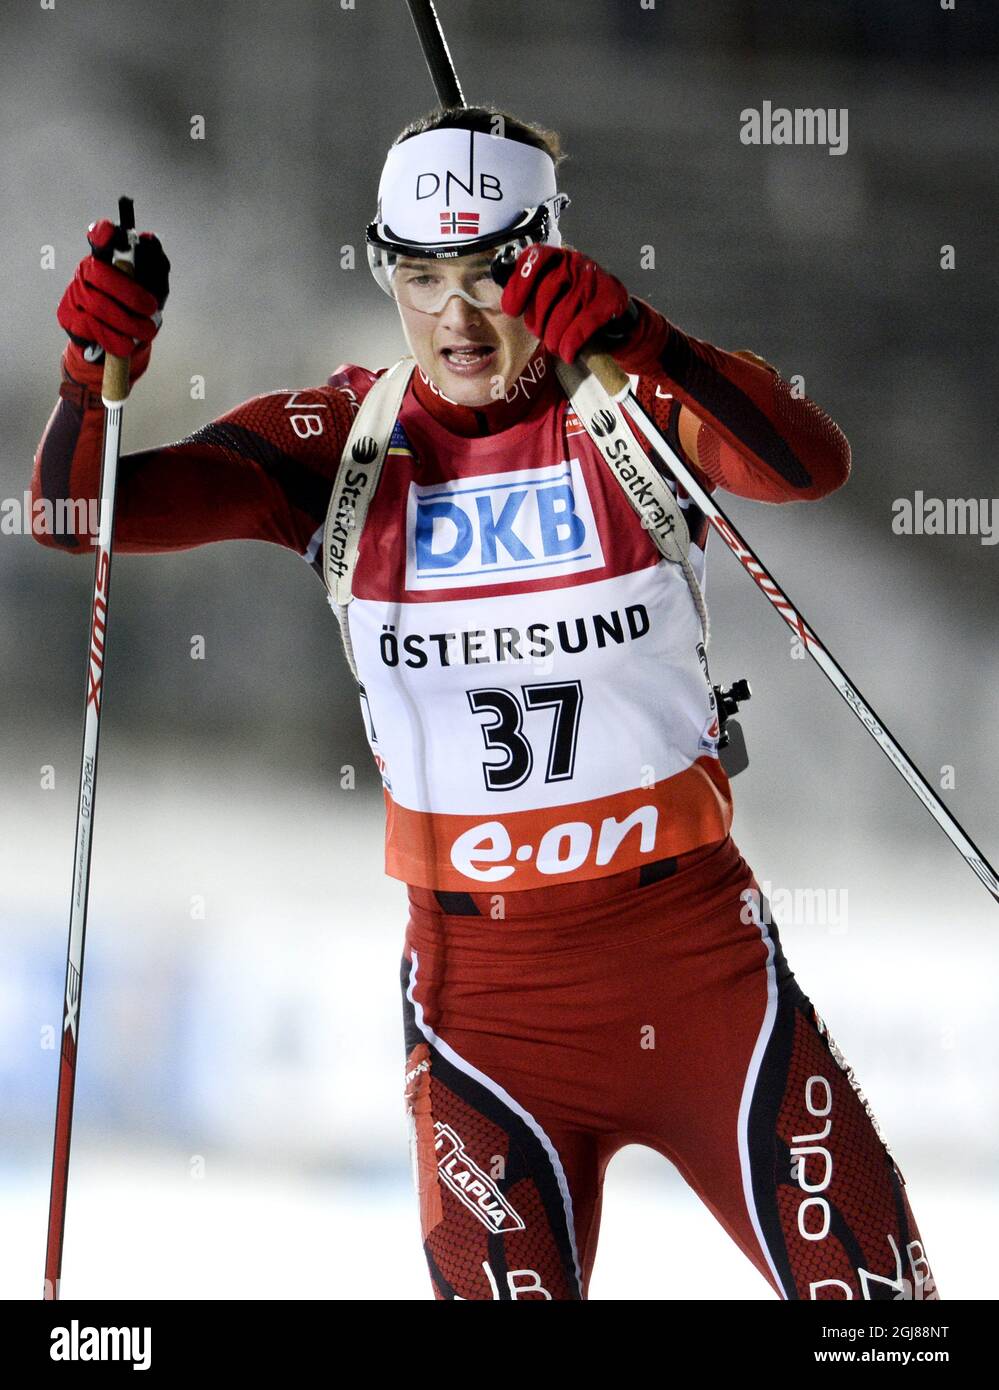 Ann Kristin Flatland of Norway during the Women's 7,5 km sprint race of the Biathlon World Cup in Ostersund, Sweden, on Nov. 29, 2013. Flatland won the race. Photo: Pontus Lundahl / TT / code 10050  Stock Photo